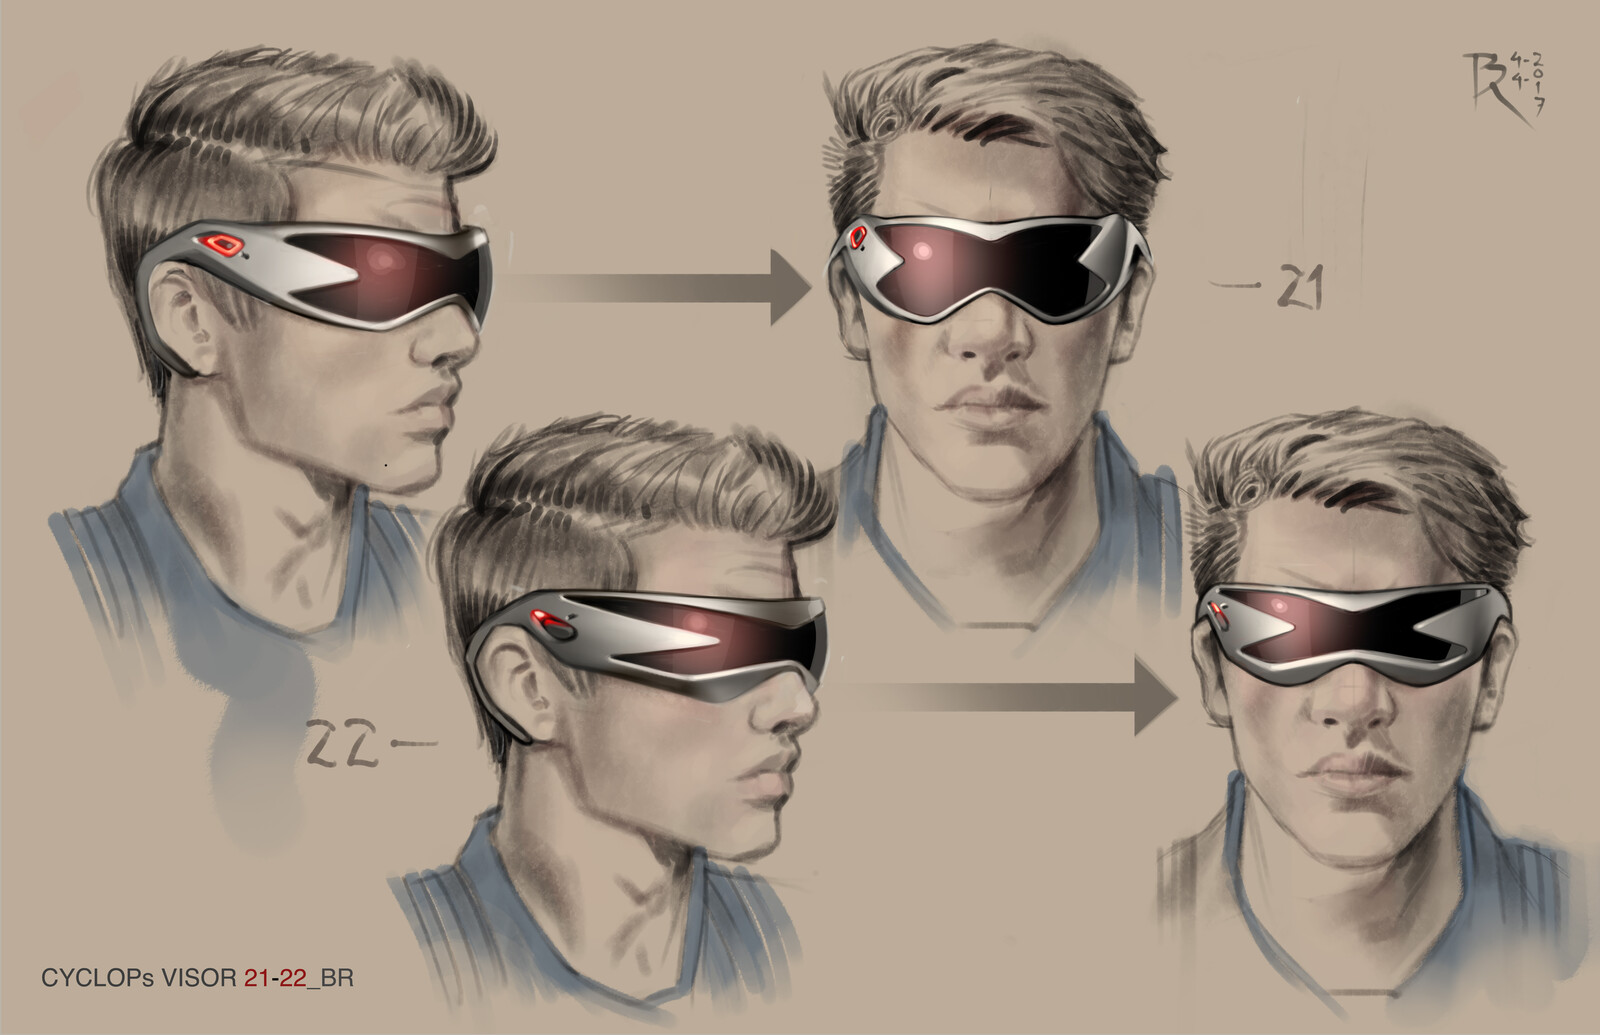 Cyclops' Visor 21-22